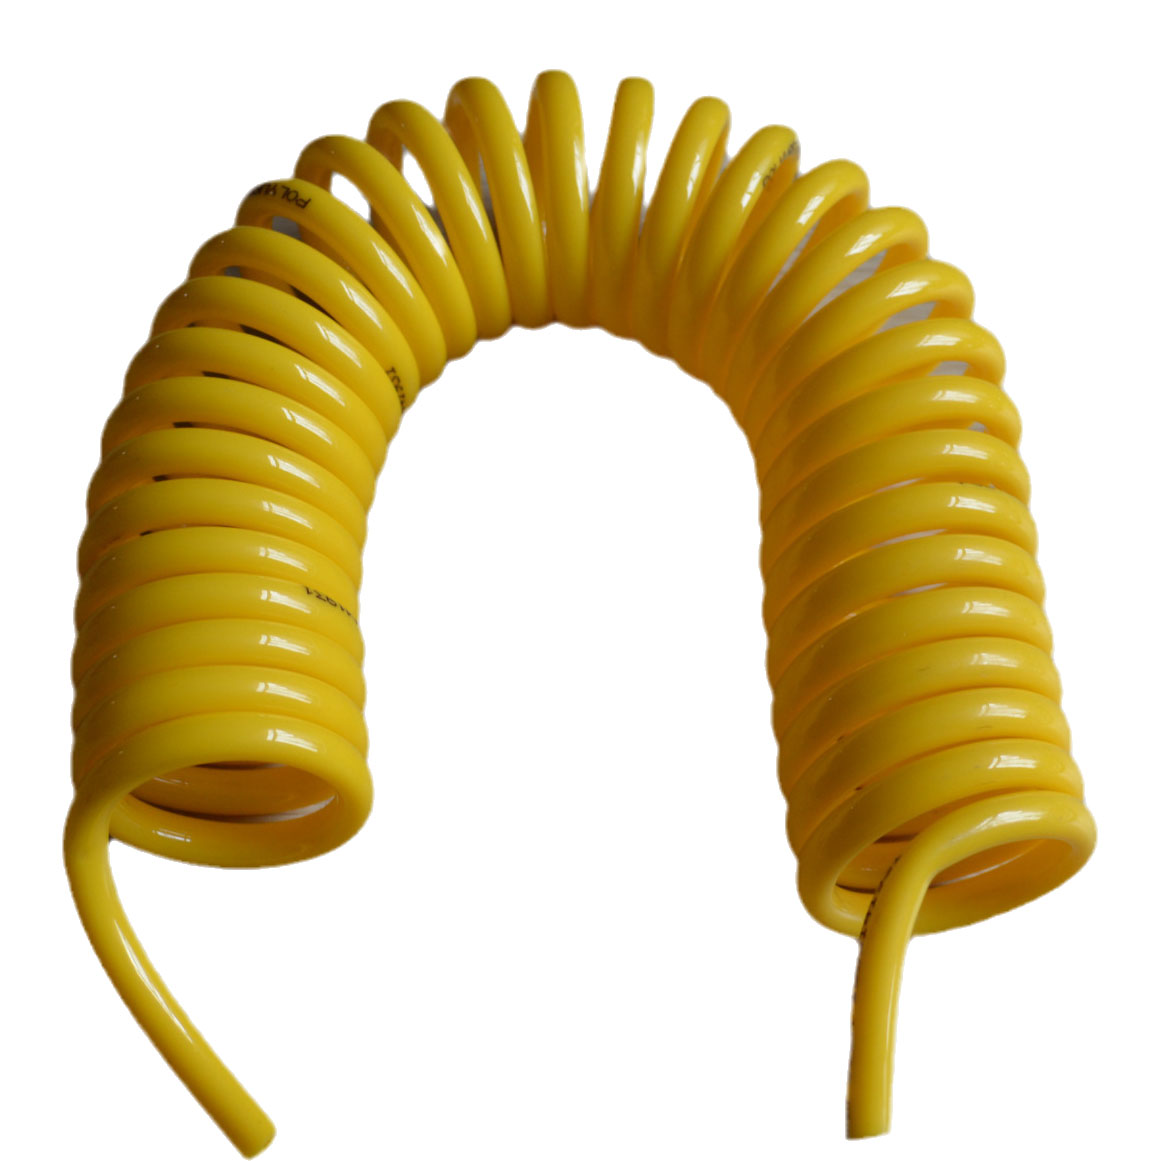 Manguera neumática en espiral de PU de la serie de tubos de resorte/tubo espiral de PU/tubo en espiral de poliuretano G103